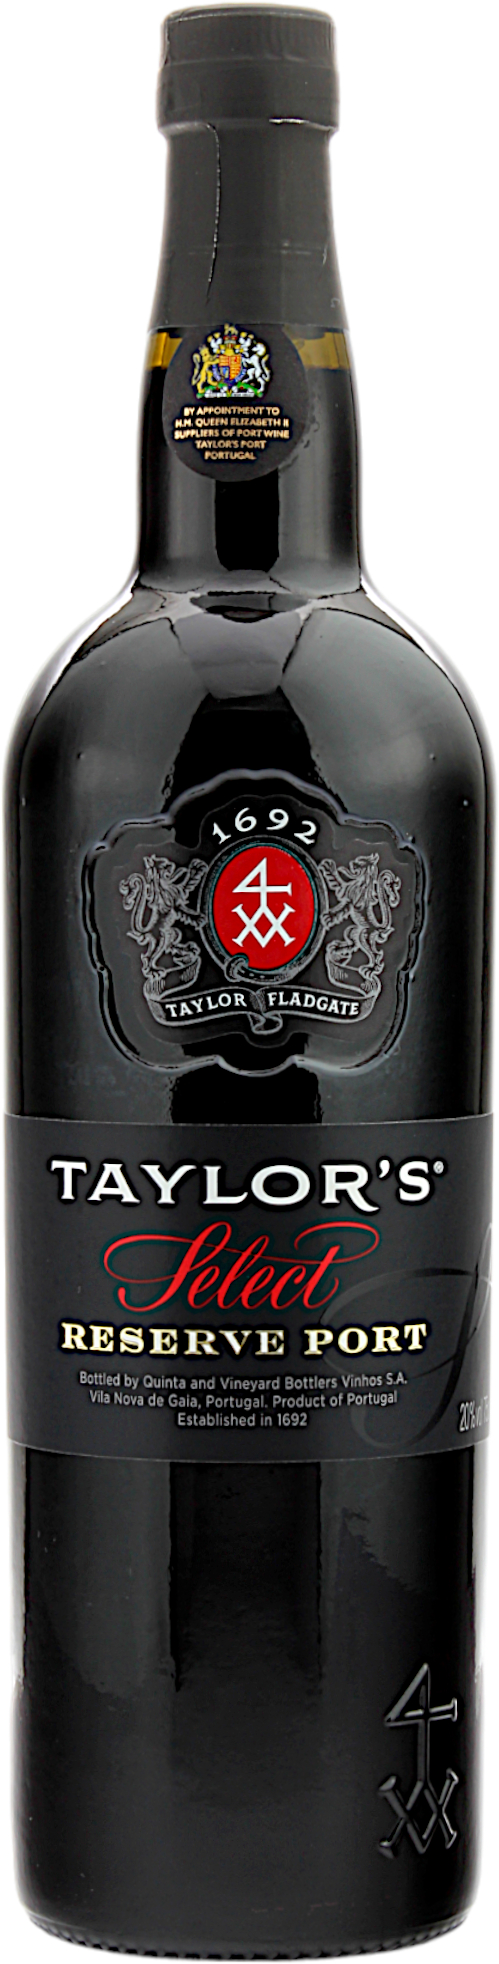 Taylor's Select Reserve Port 20.0% 0,75l